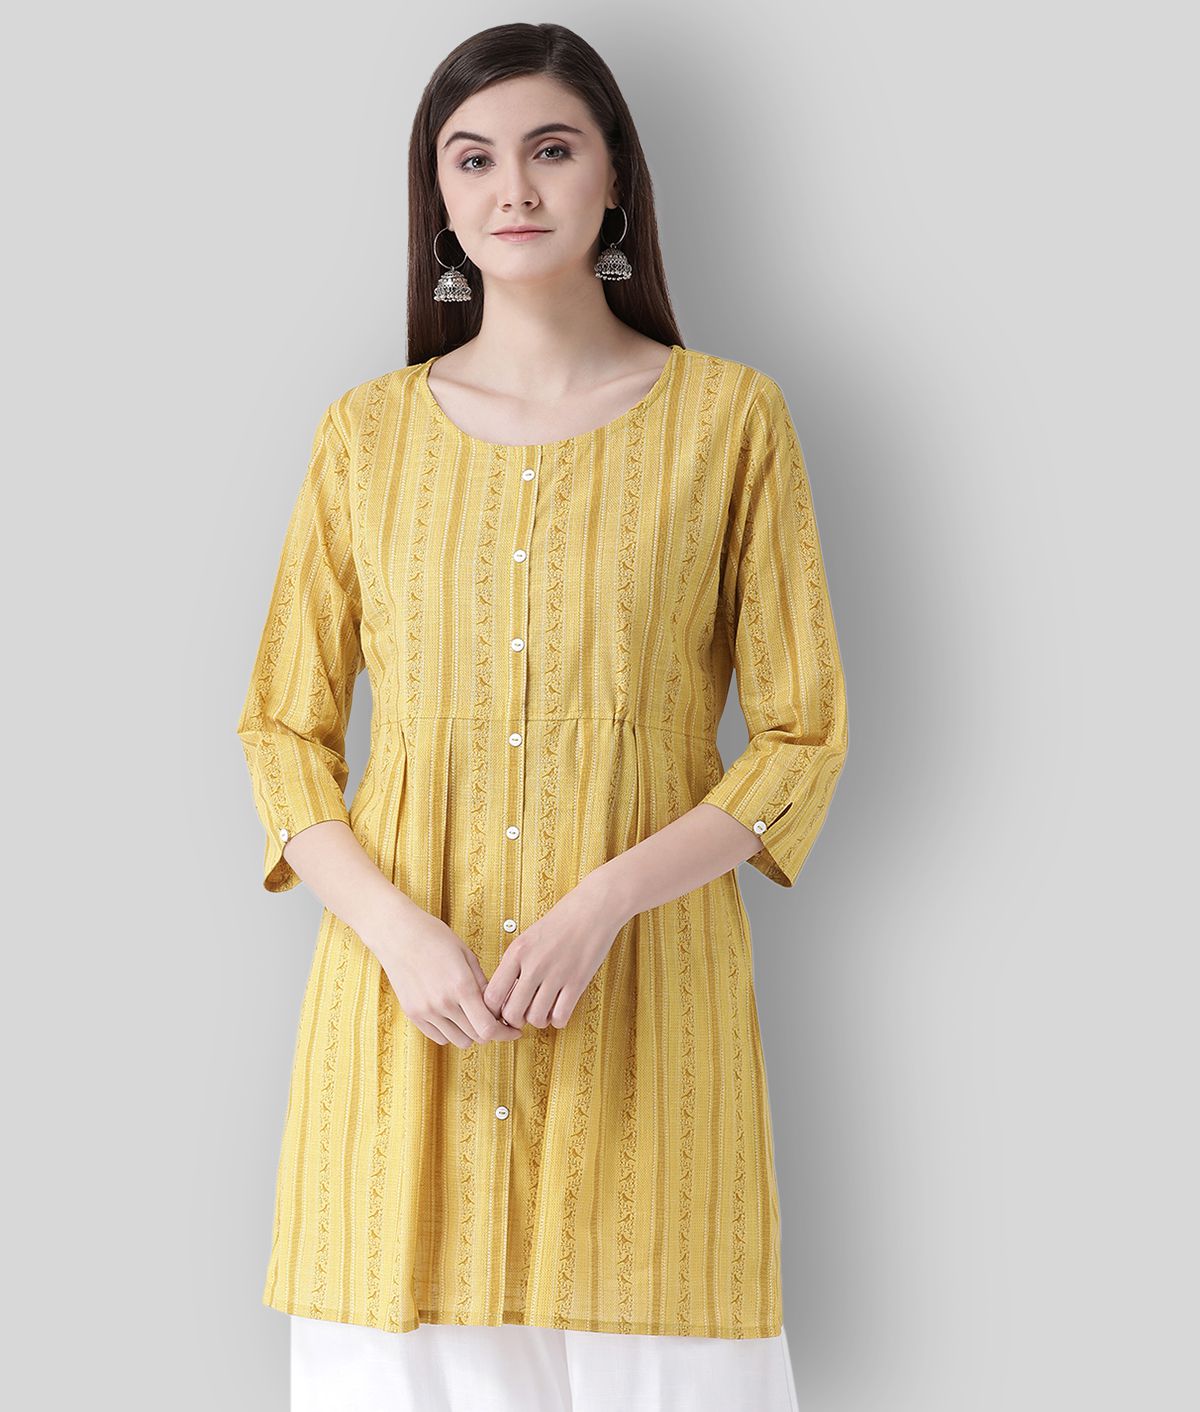 Span - Yellow Cotton Women's Straight Kurti